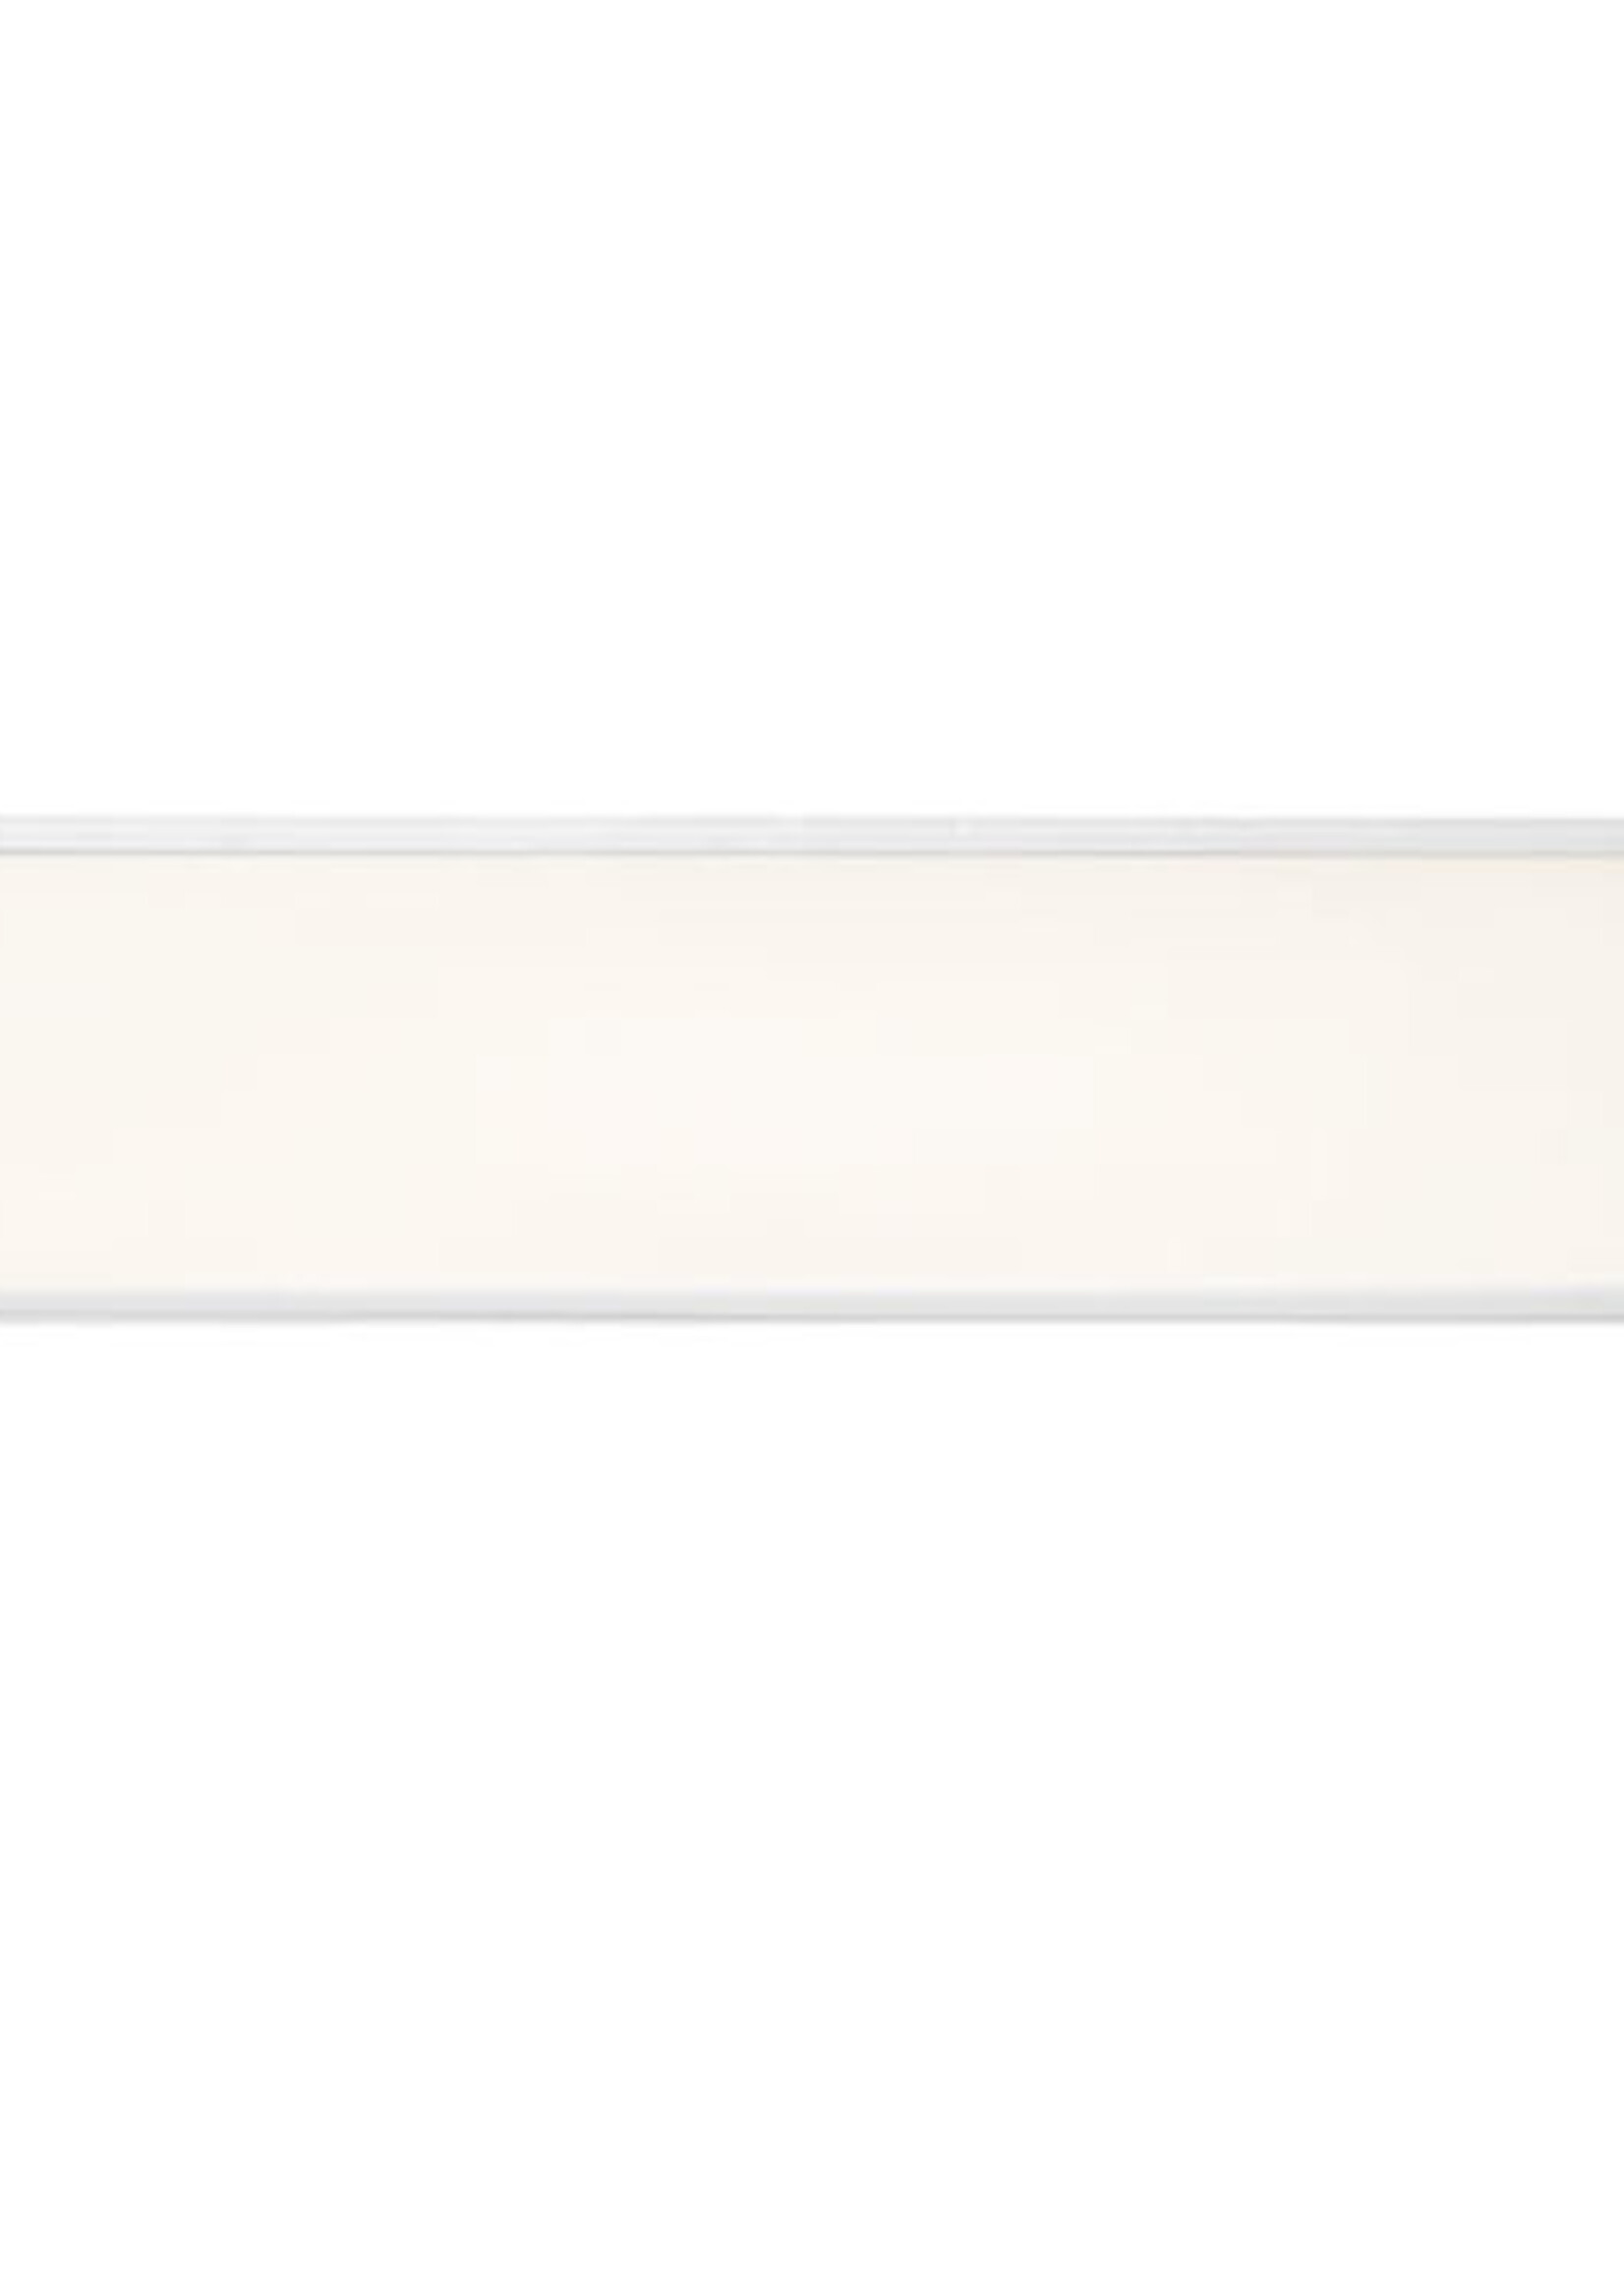 LEDWINKEL-Online LED Panel 30x120cm 36W 120lm/W High lumen Edge-lit